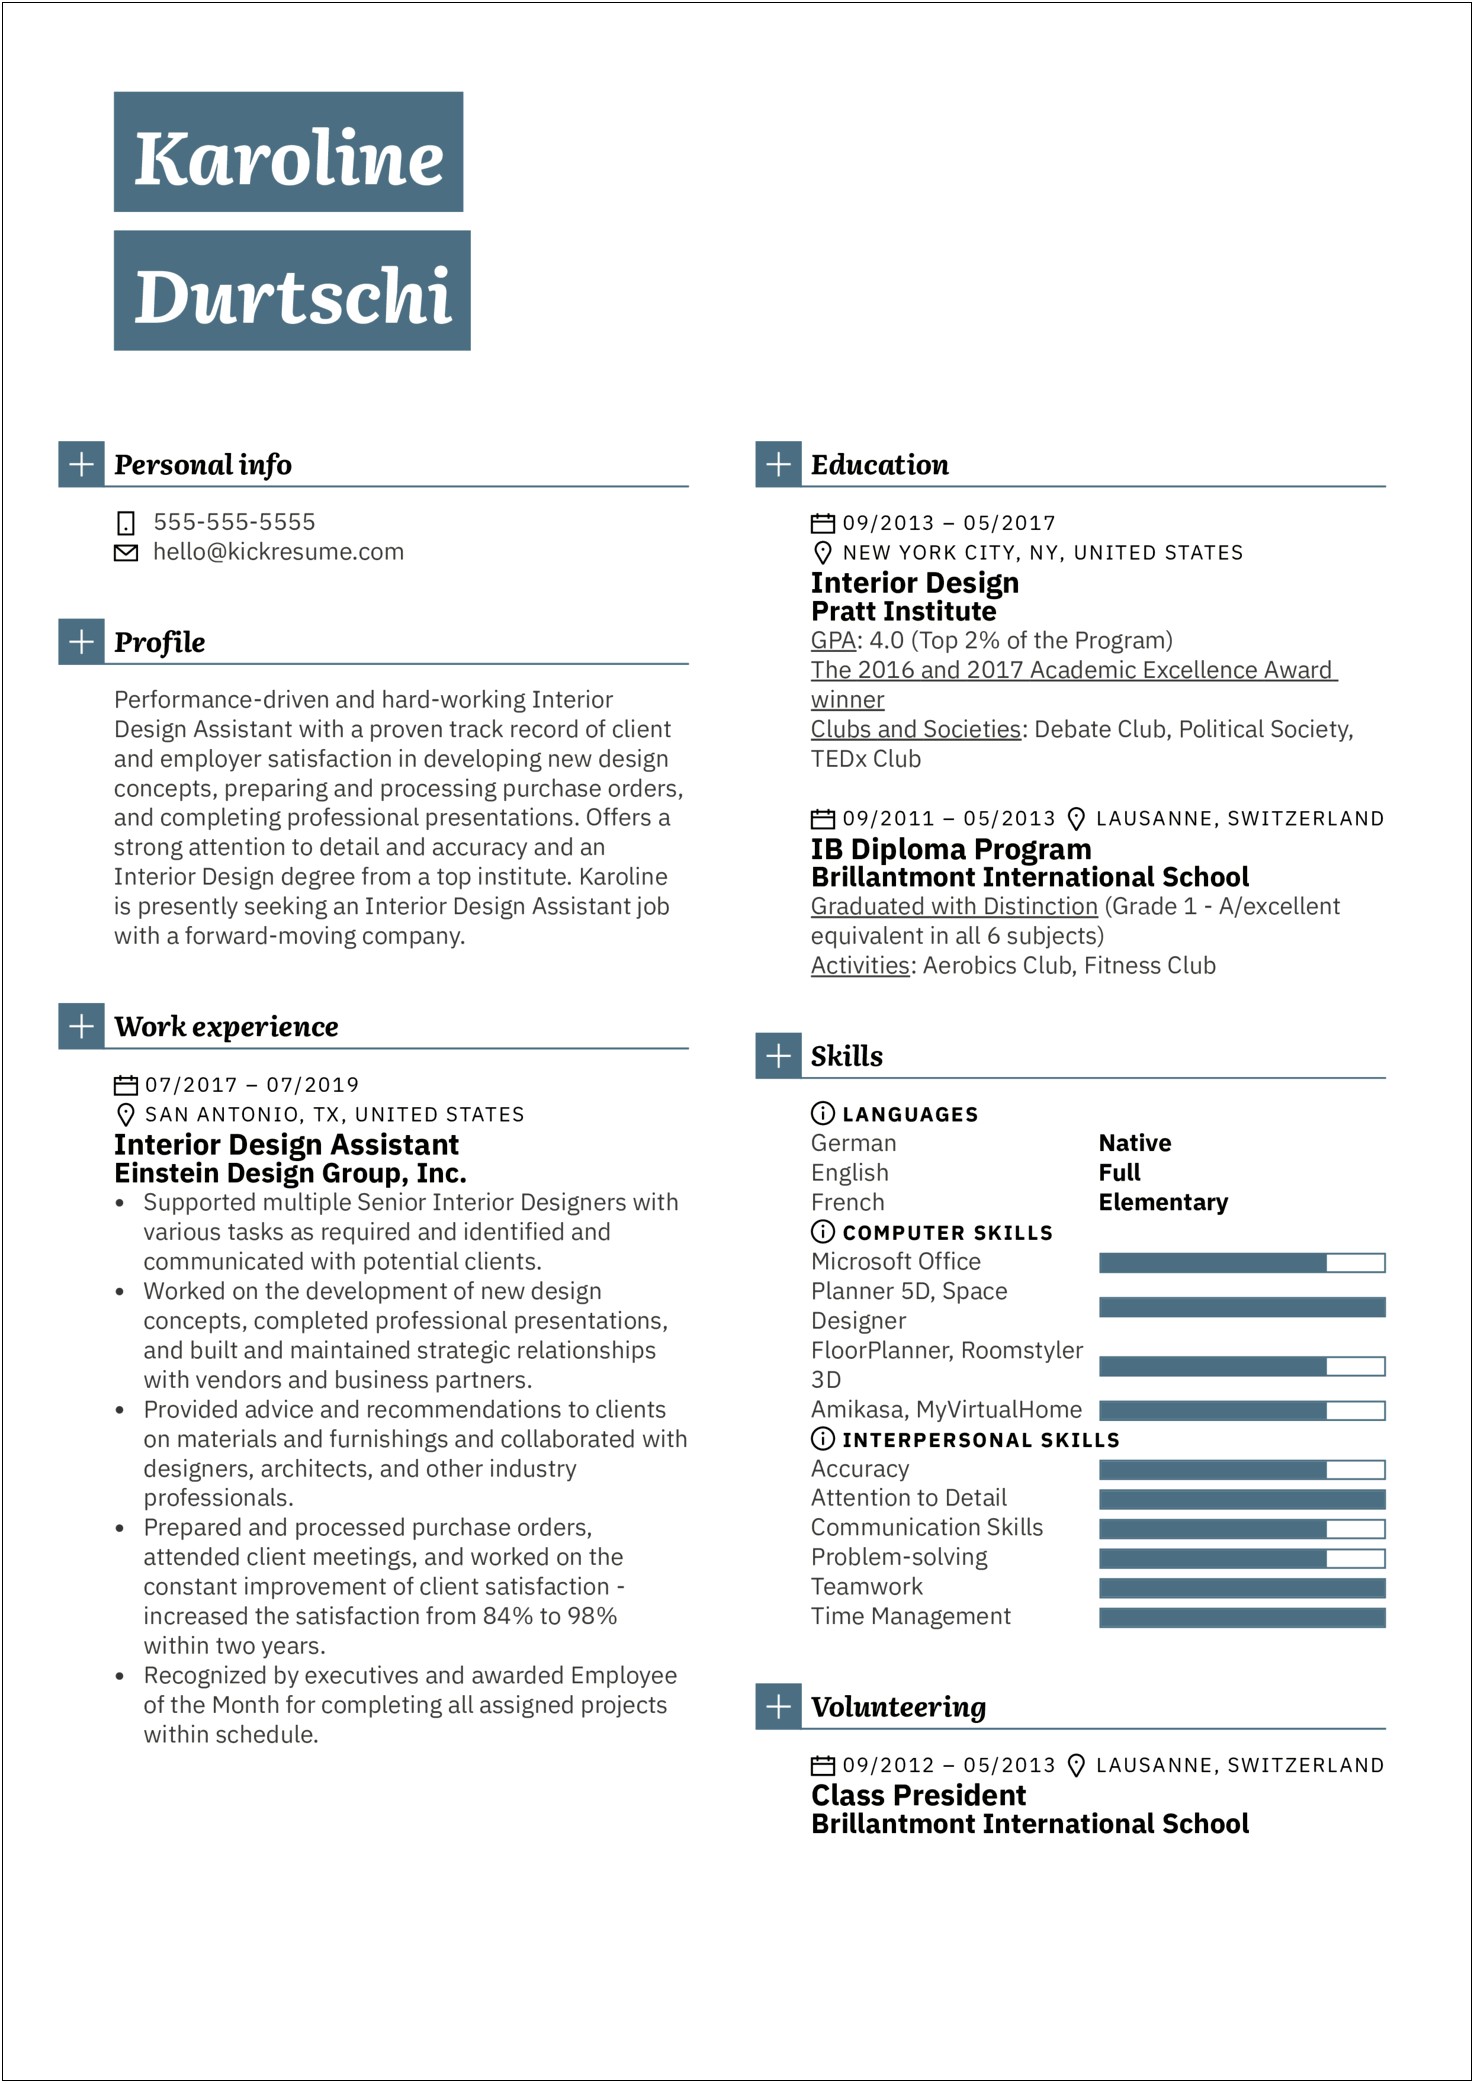 Resume Summary Examples For Interior Designers